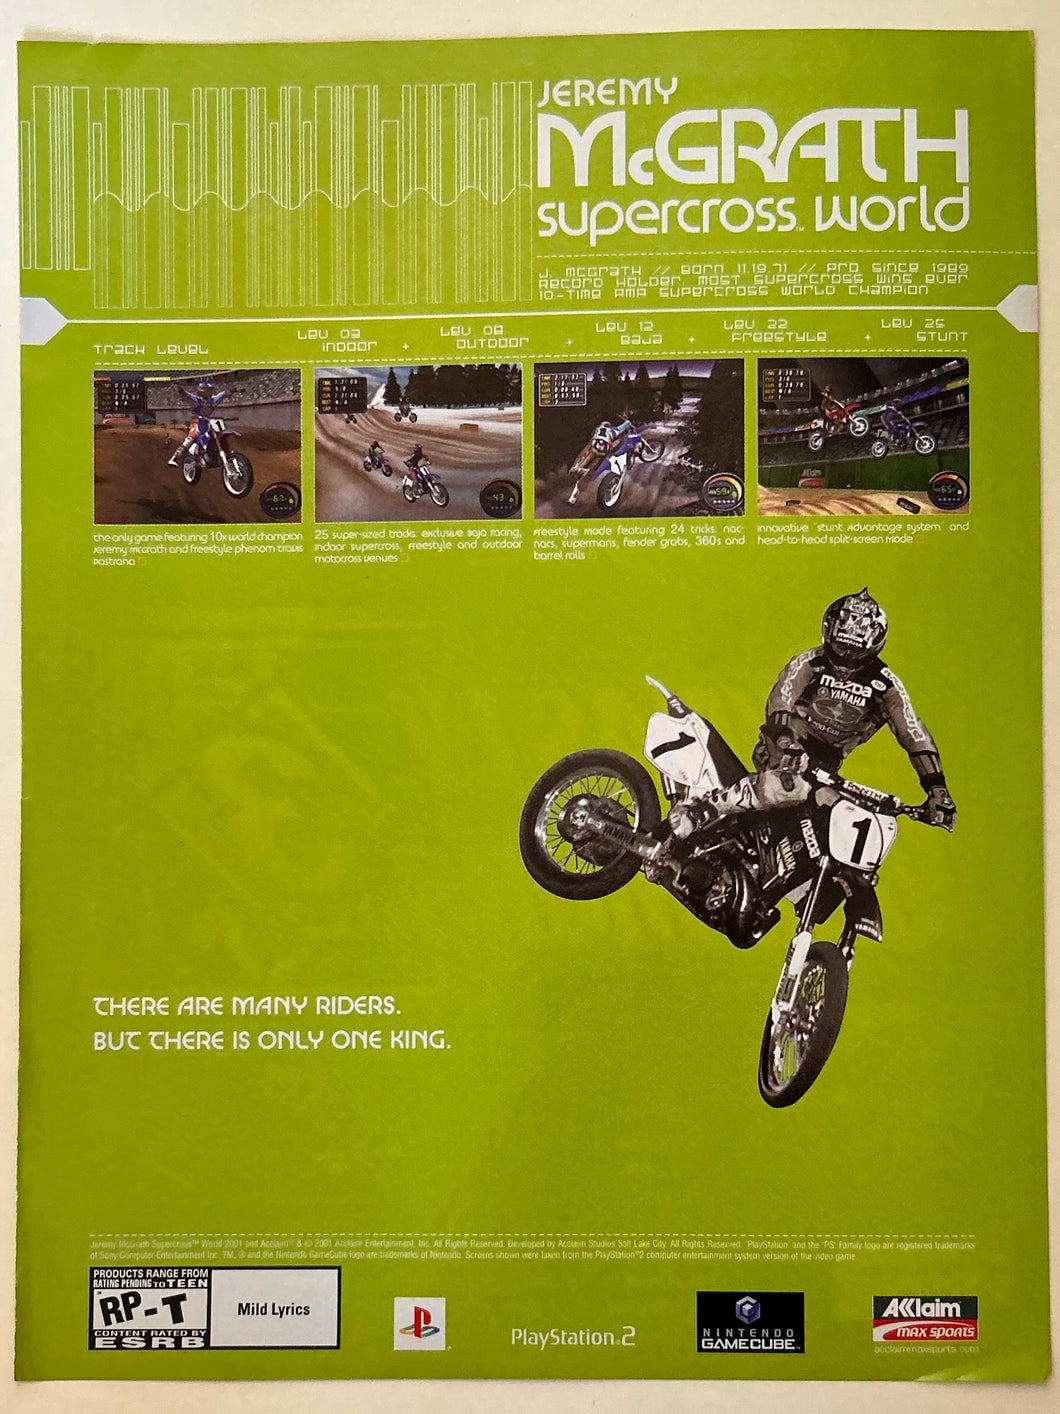 Jeremy McGrath Supercross World - PS2 NGC - Original Vintage Advertisement - Print Ads - Laminated A4 Poster